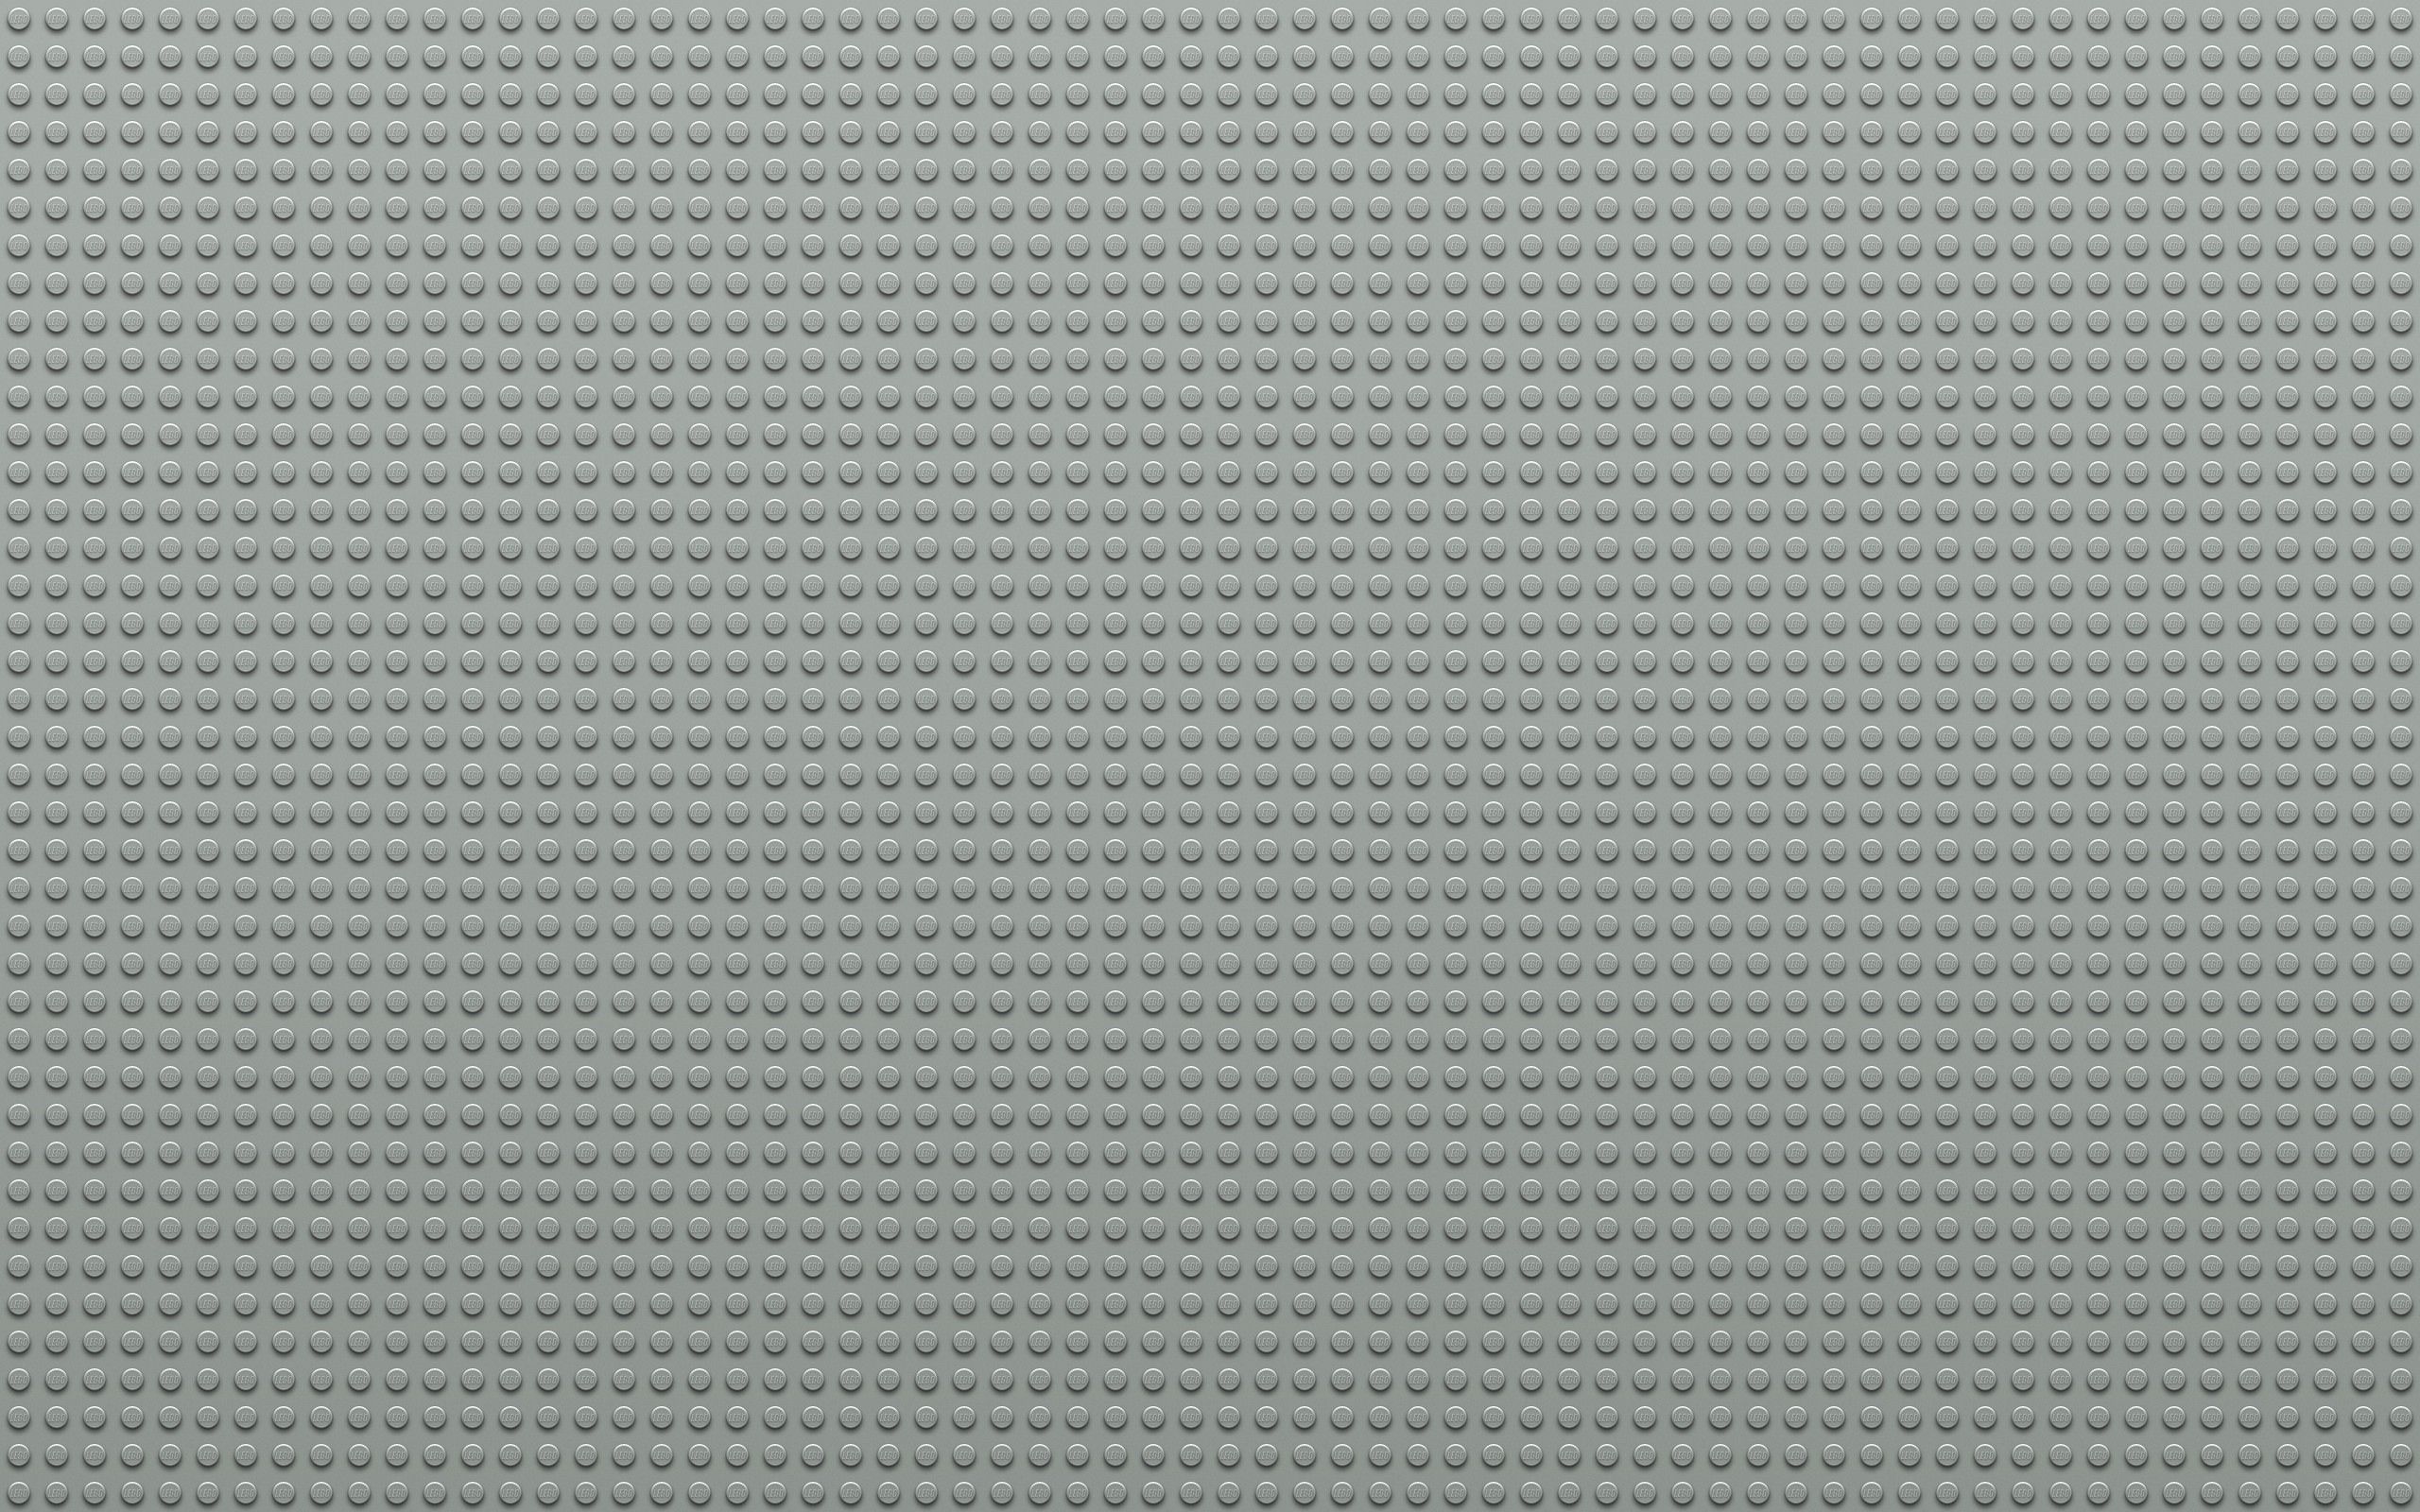 lego, circles, texture, textures, points, point, light gray Image for desktop